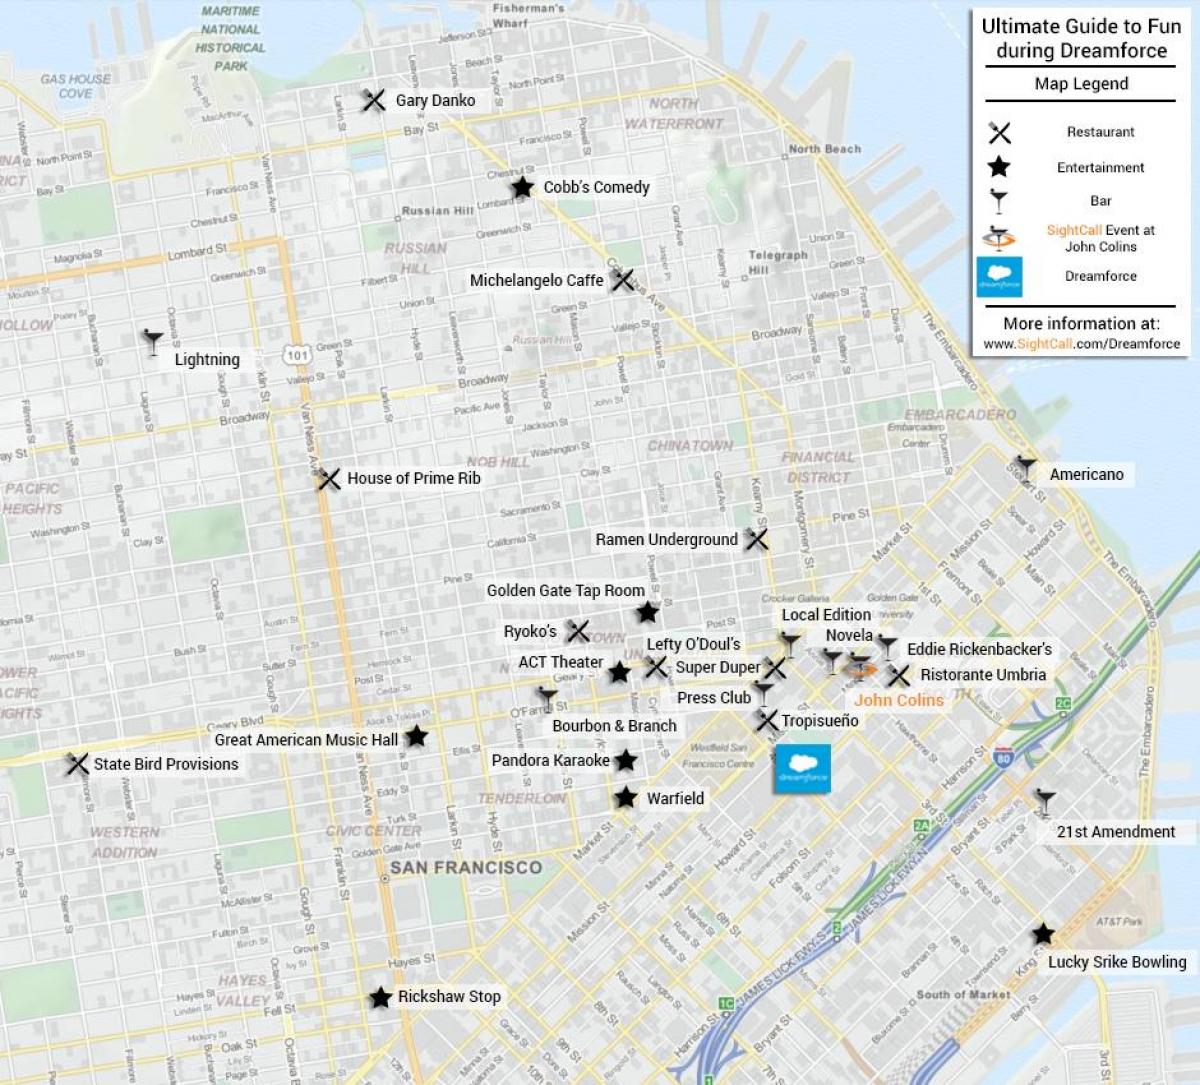 Map of San Francisco restaurant